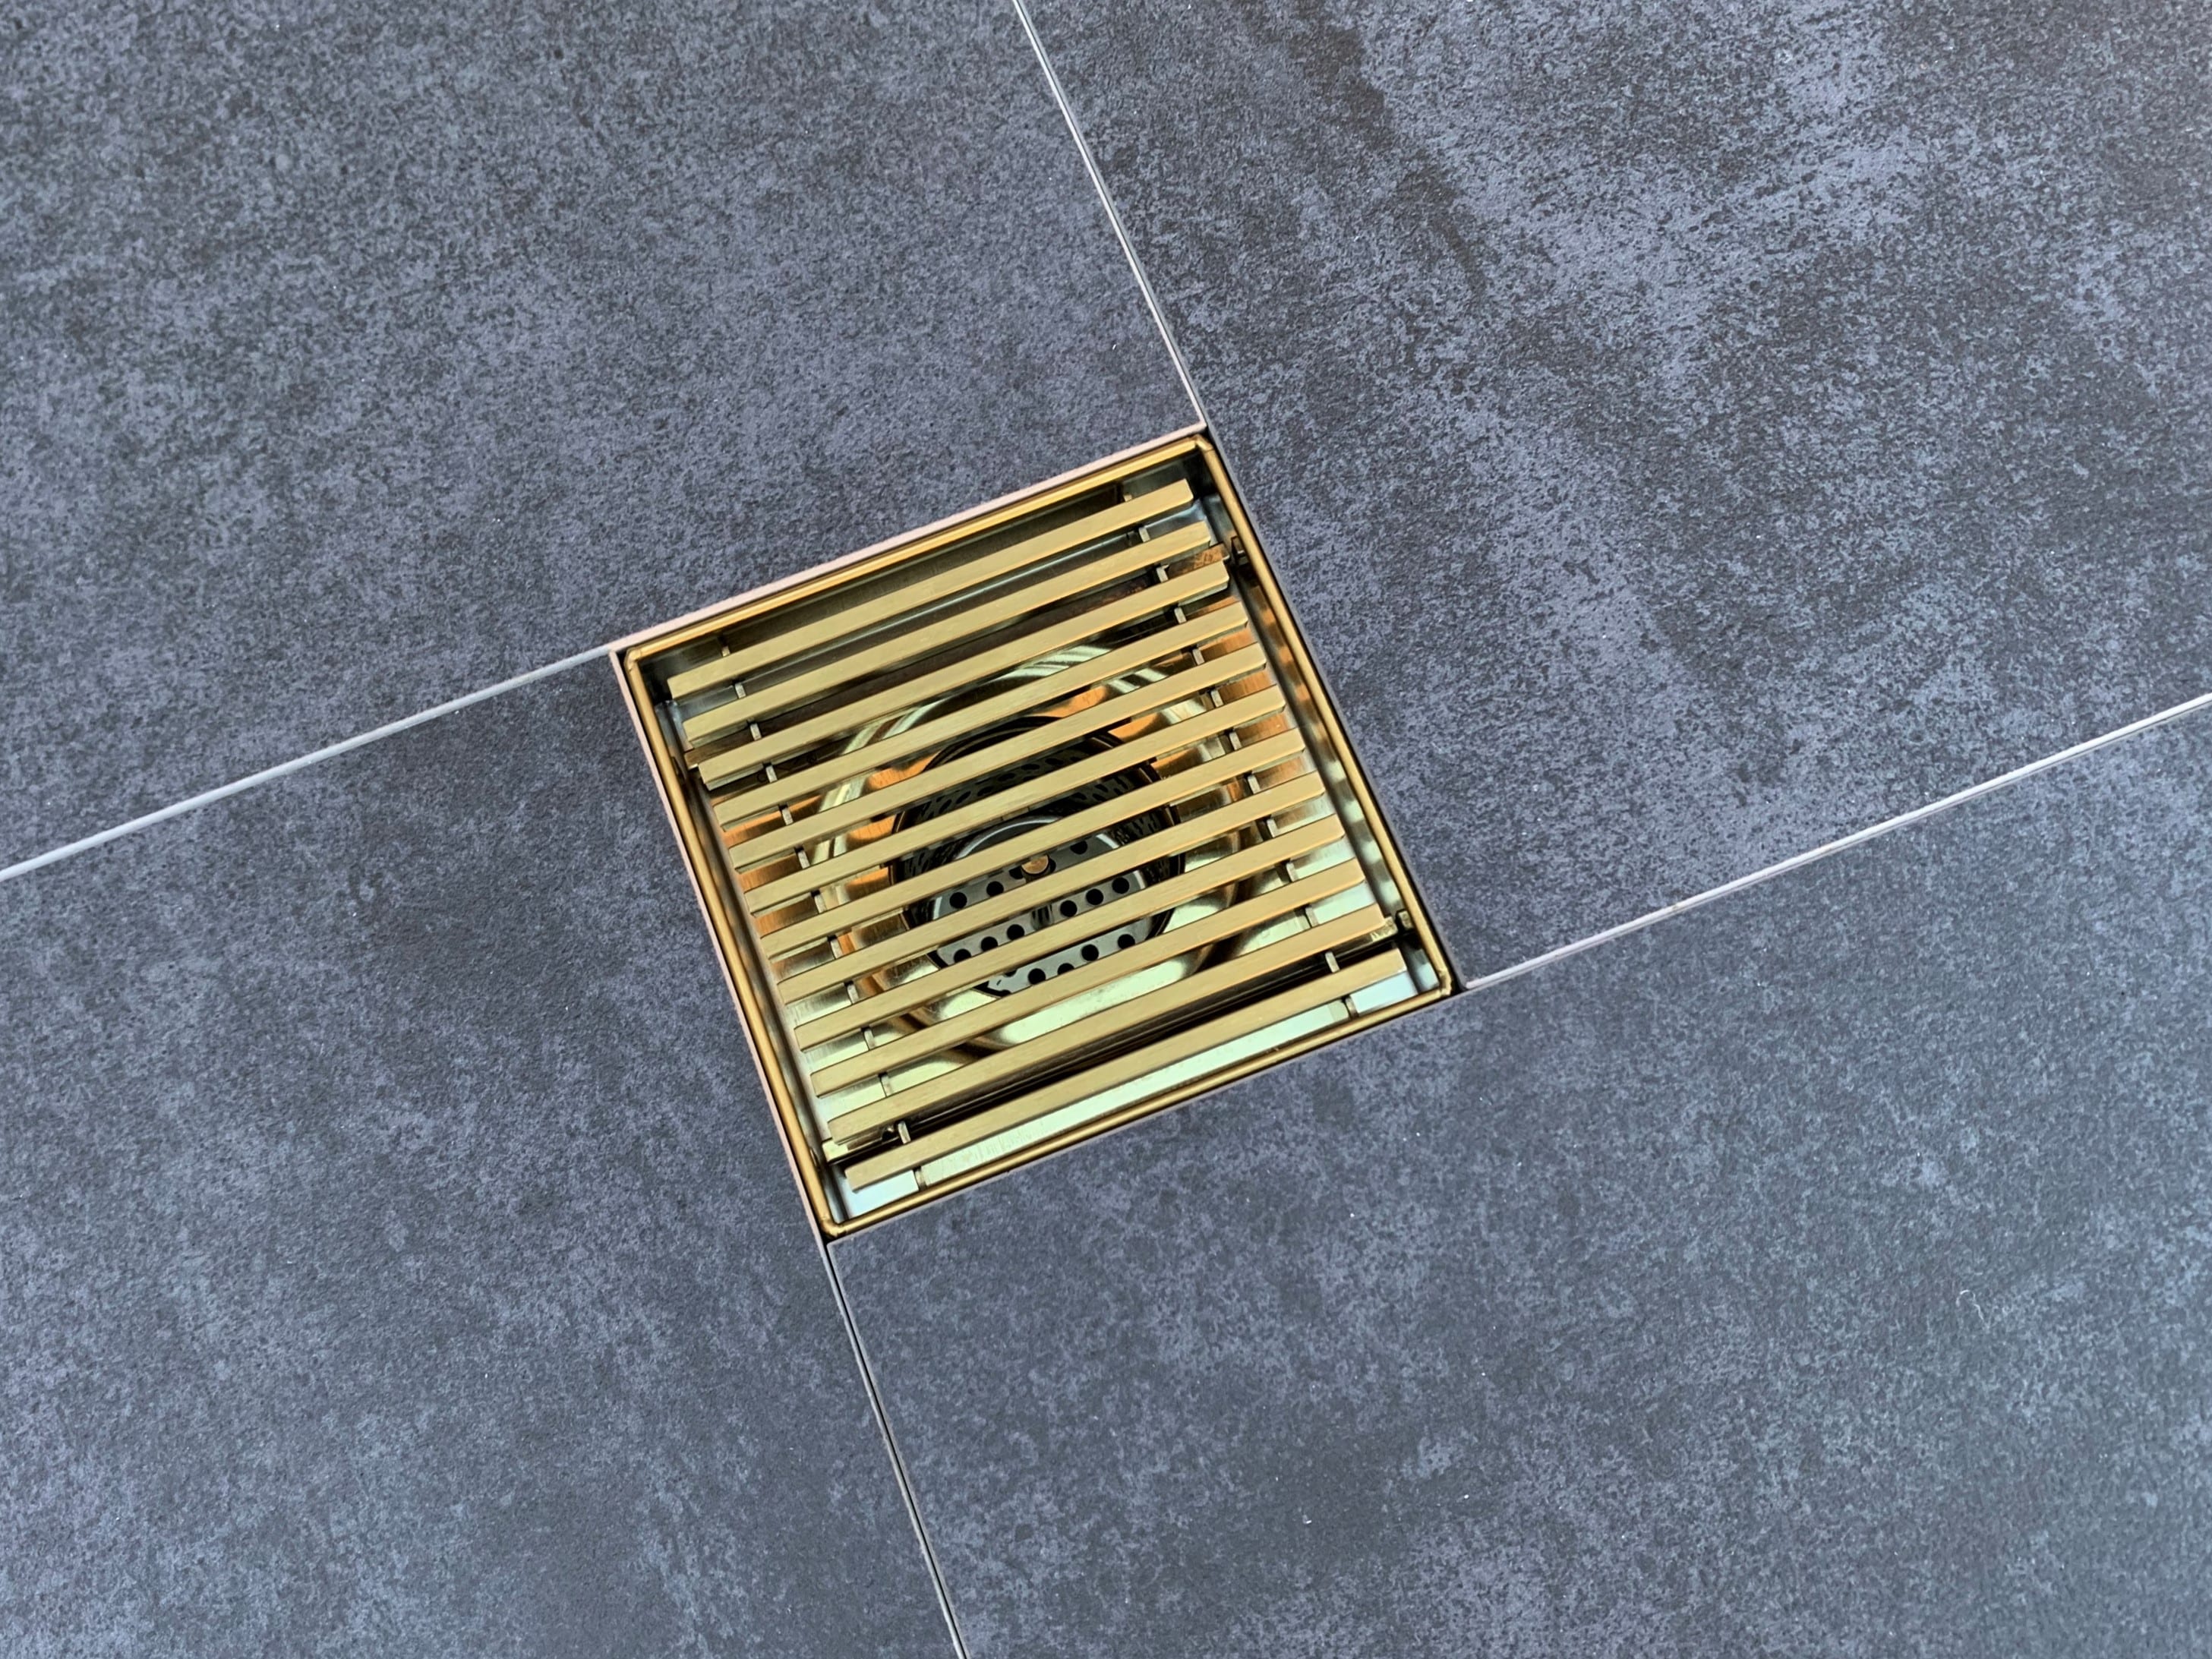 Removable Floor Drain Filter, Stainless Steel Shower Drain Cover